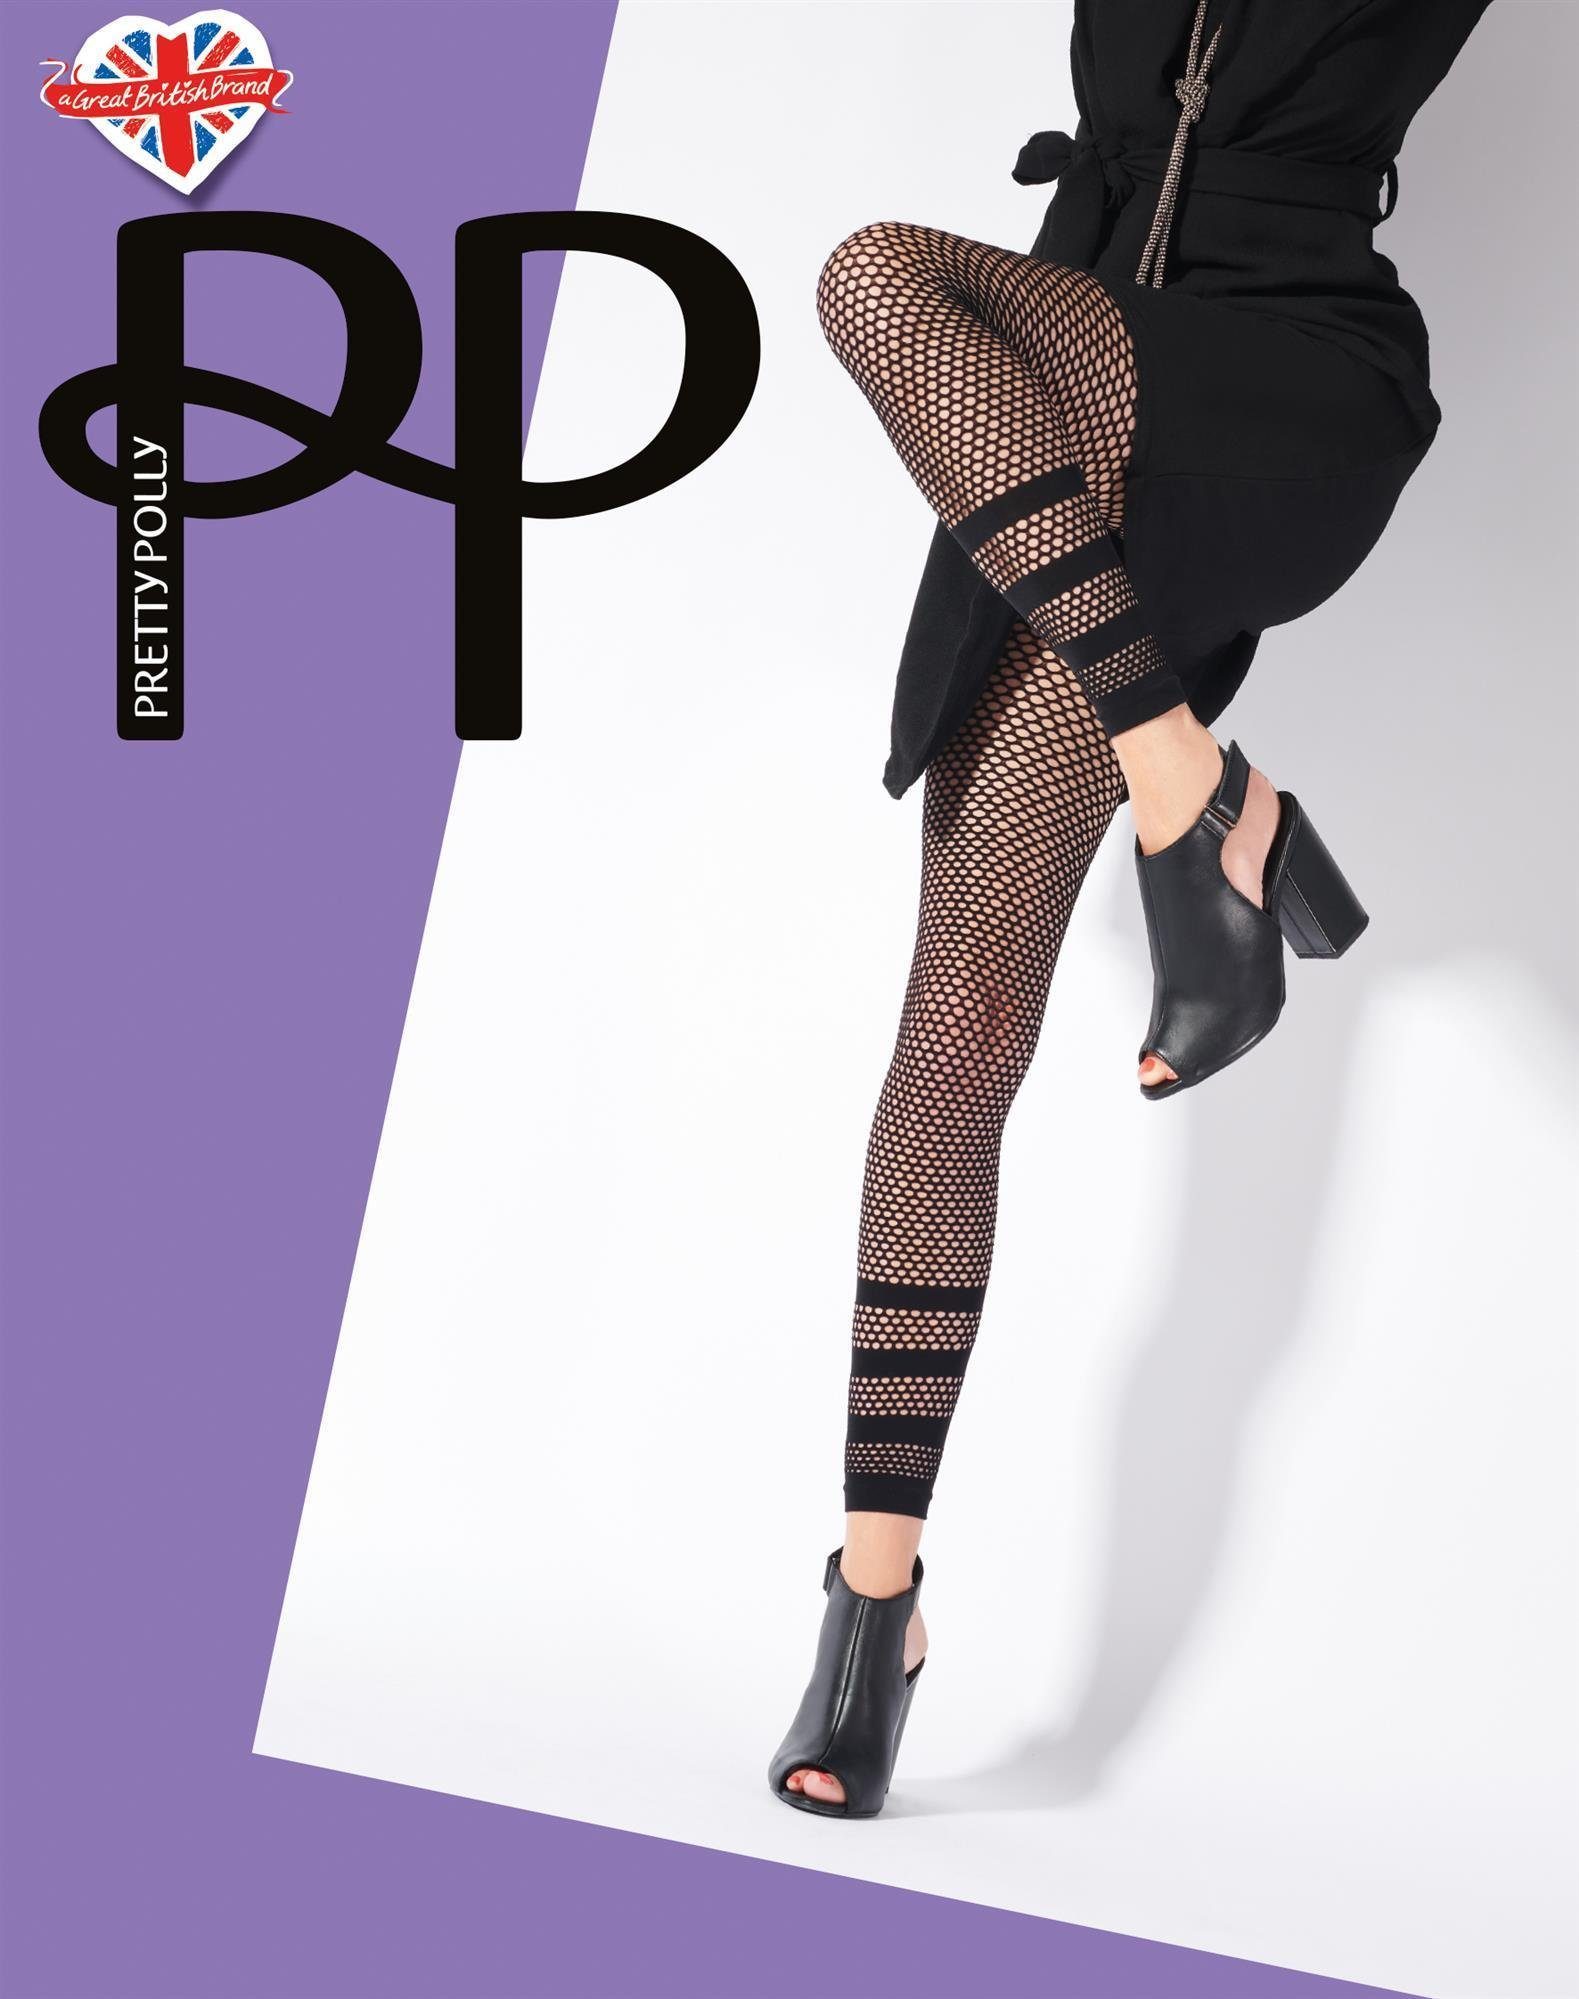 Tights Footless 15 Net Polly Premium Pretty DEN Fashion Feinstrumpfleggings Stripe